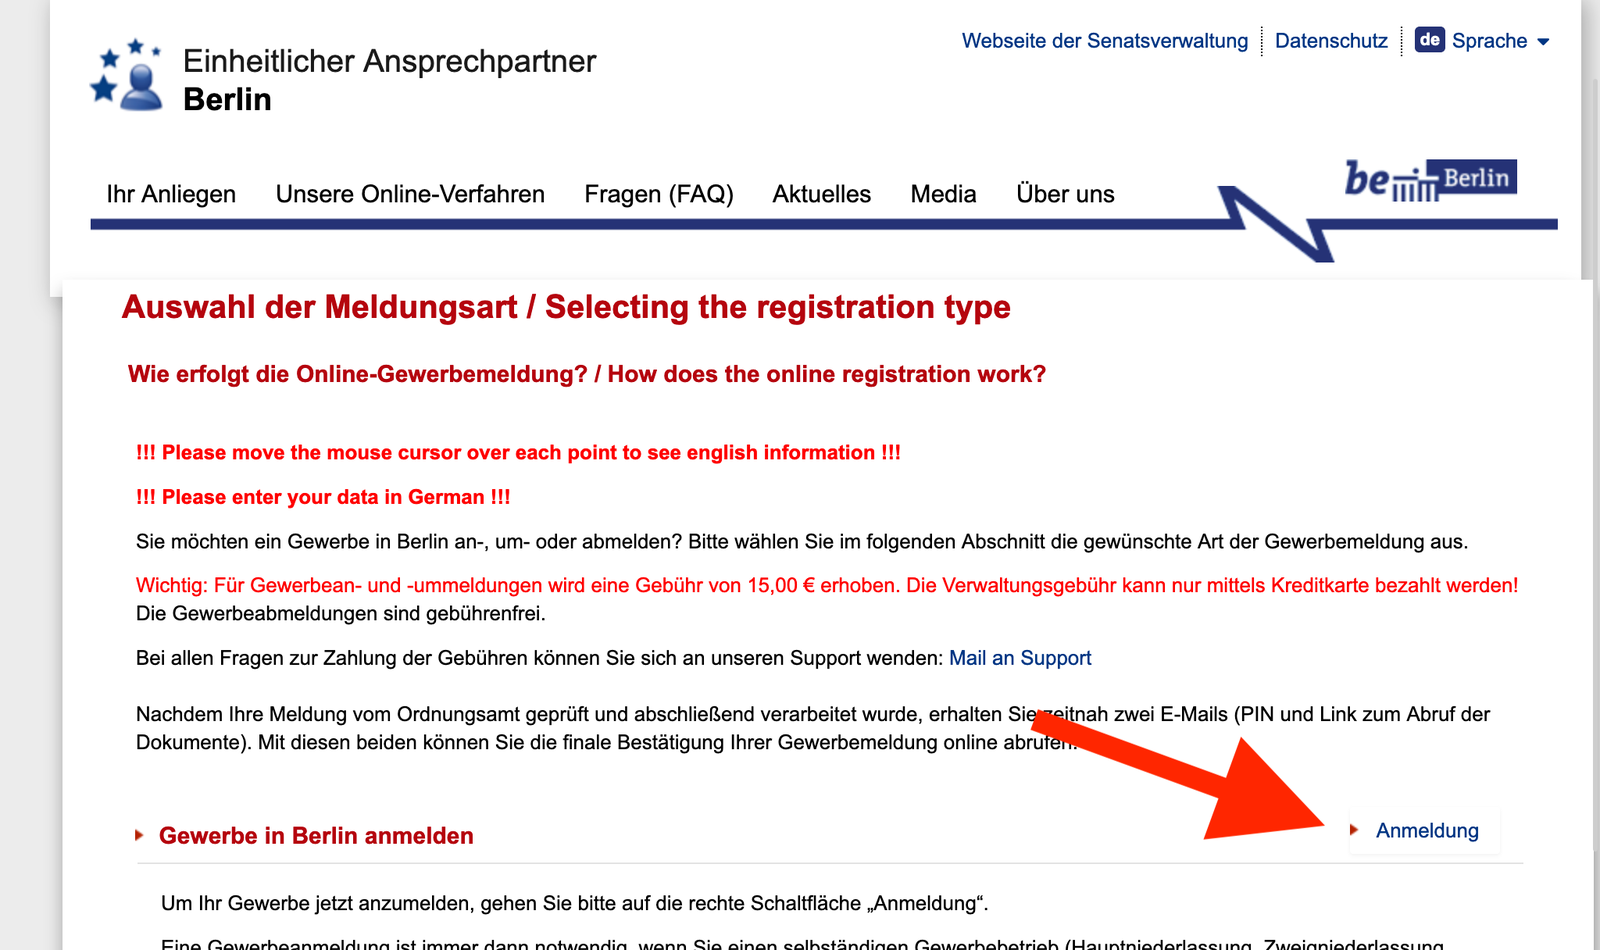 Start page of the Gewerbeanmeldung form